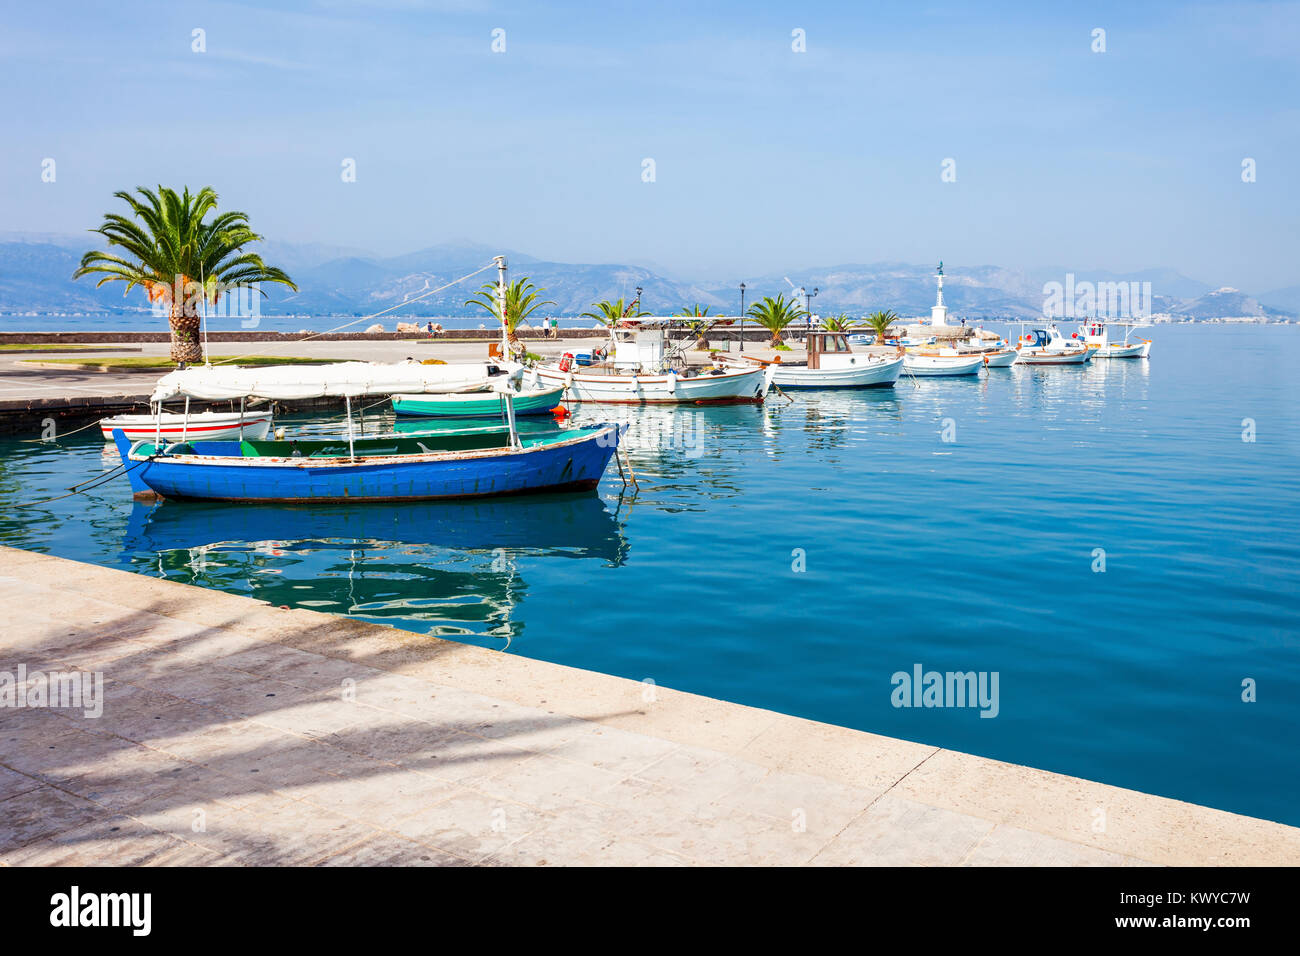 Seafront promenade in Nafplio. Nafplio is a seaport town in the Peloponnese peninsula, Greece. Stock Photo